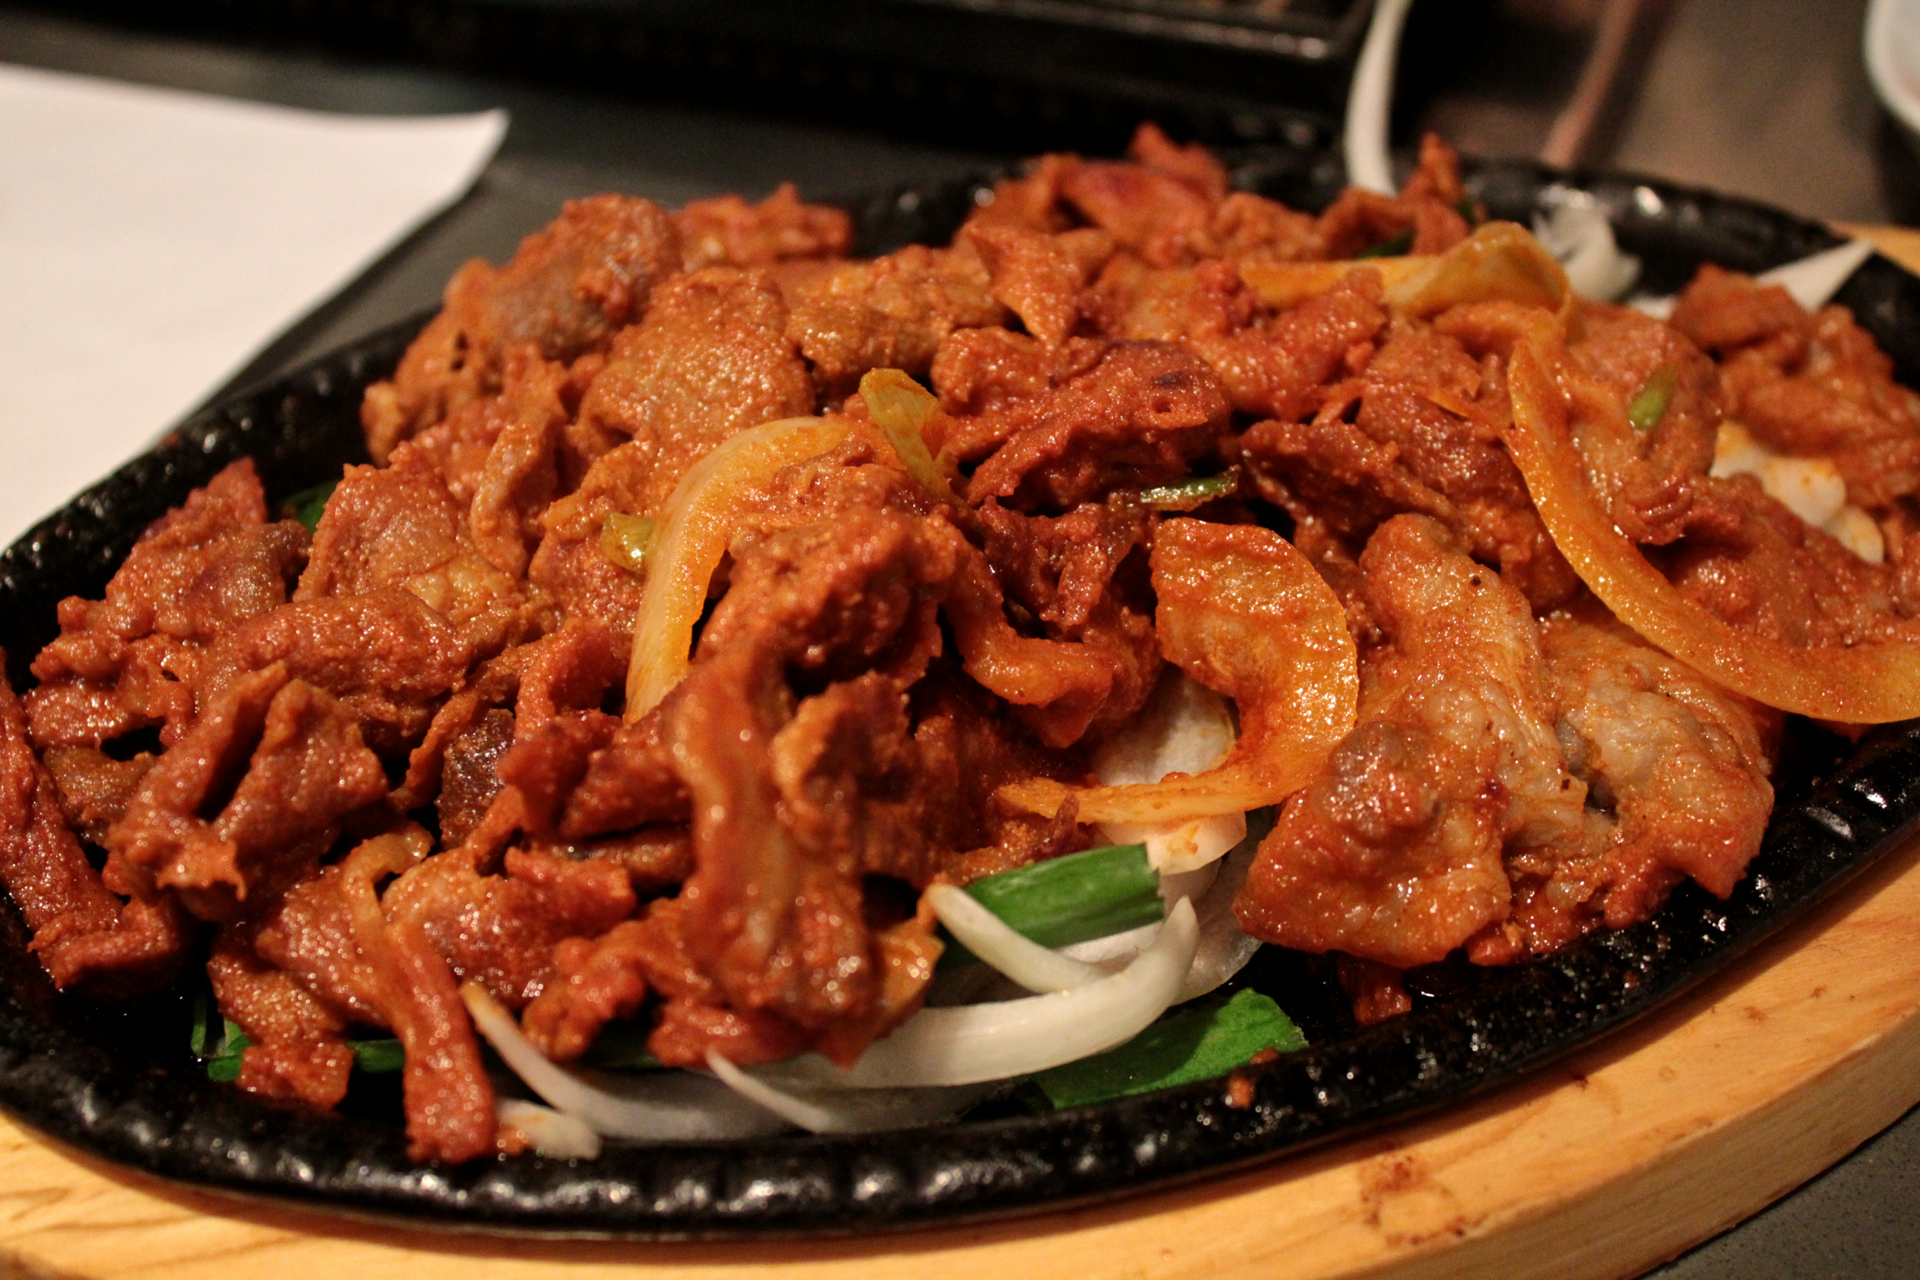 Spicy pork bulgogi at Chungdam.